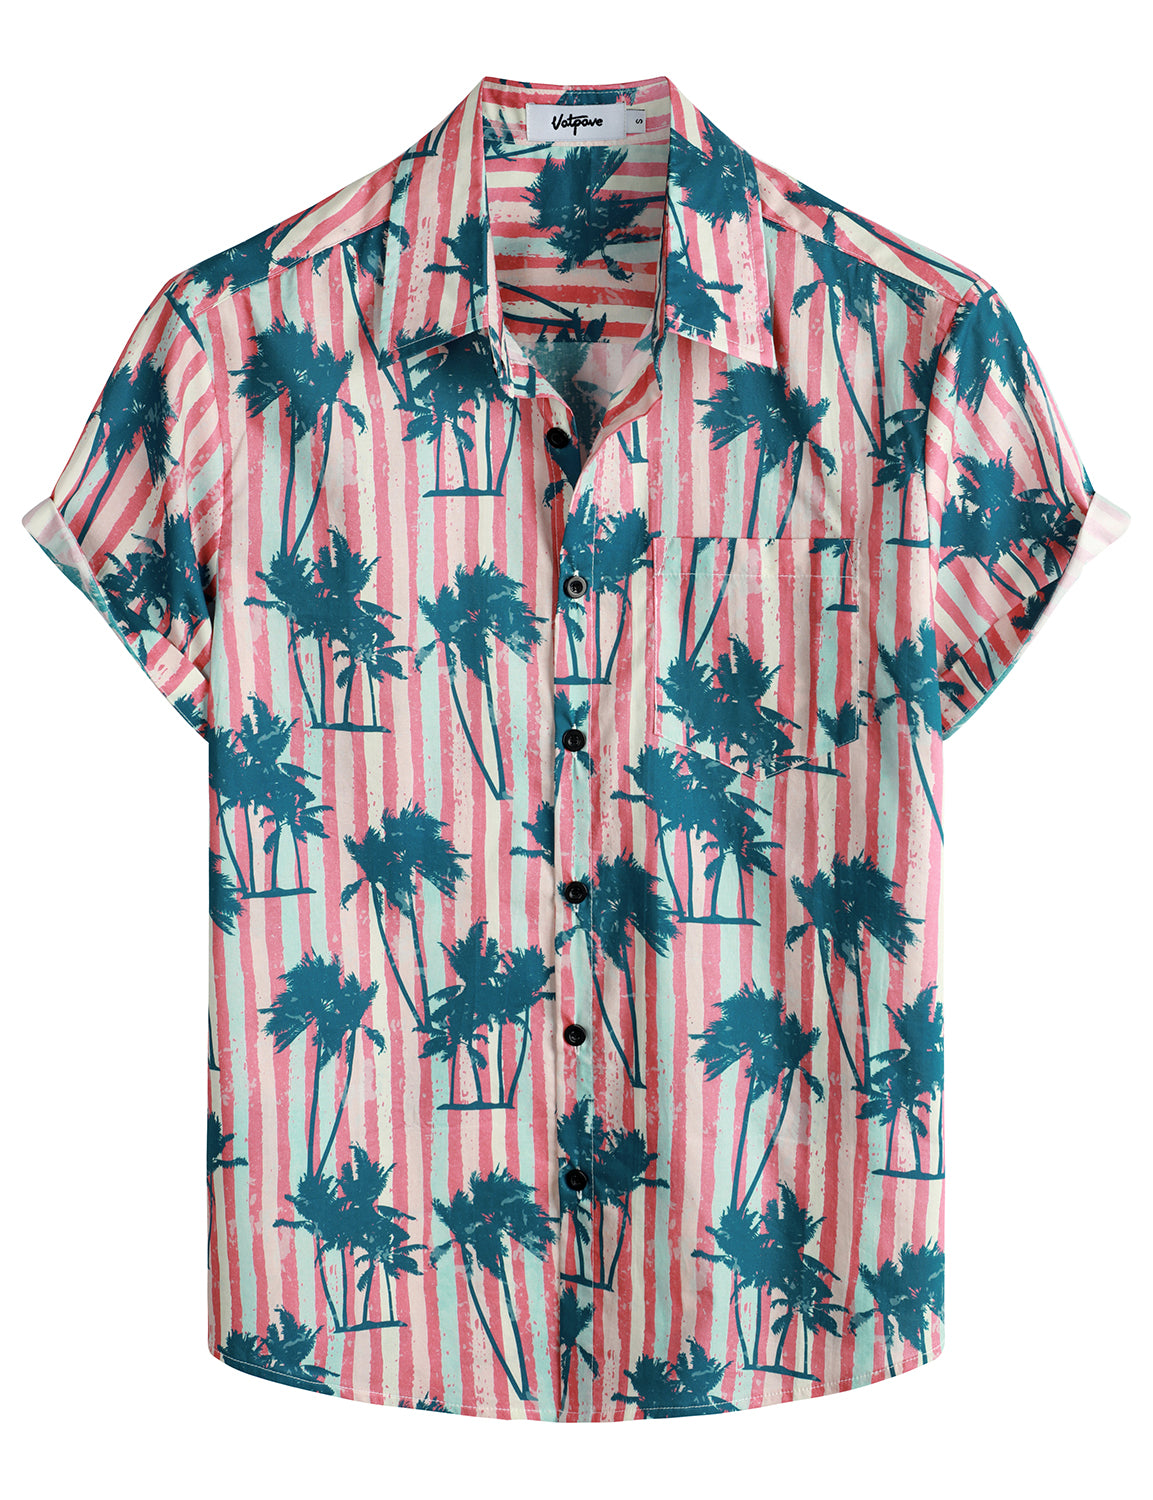 VATPAVE Mens Floral Hawaiian Shirt Casual Button Down Short Sleeve